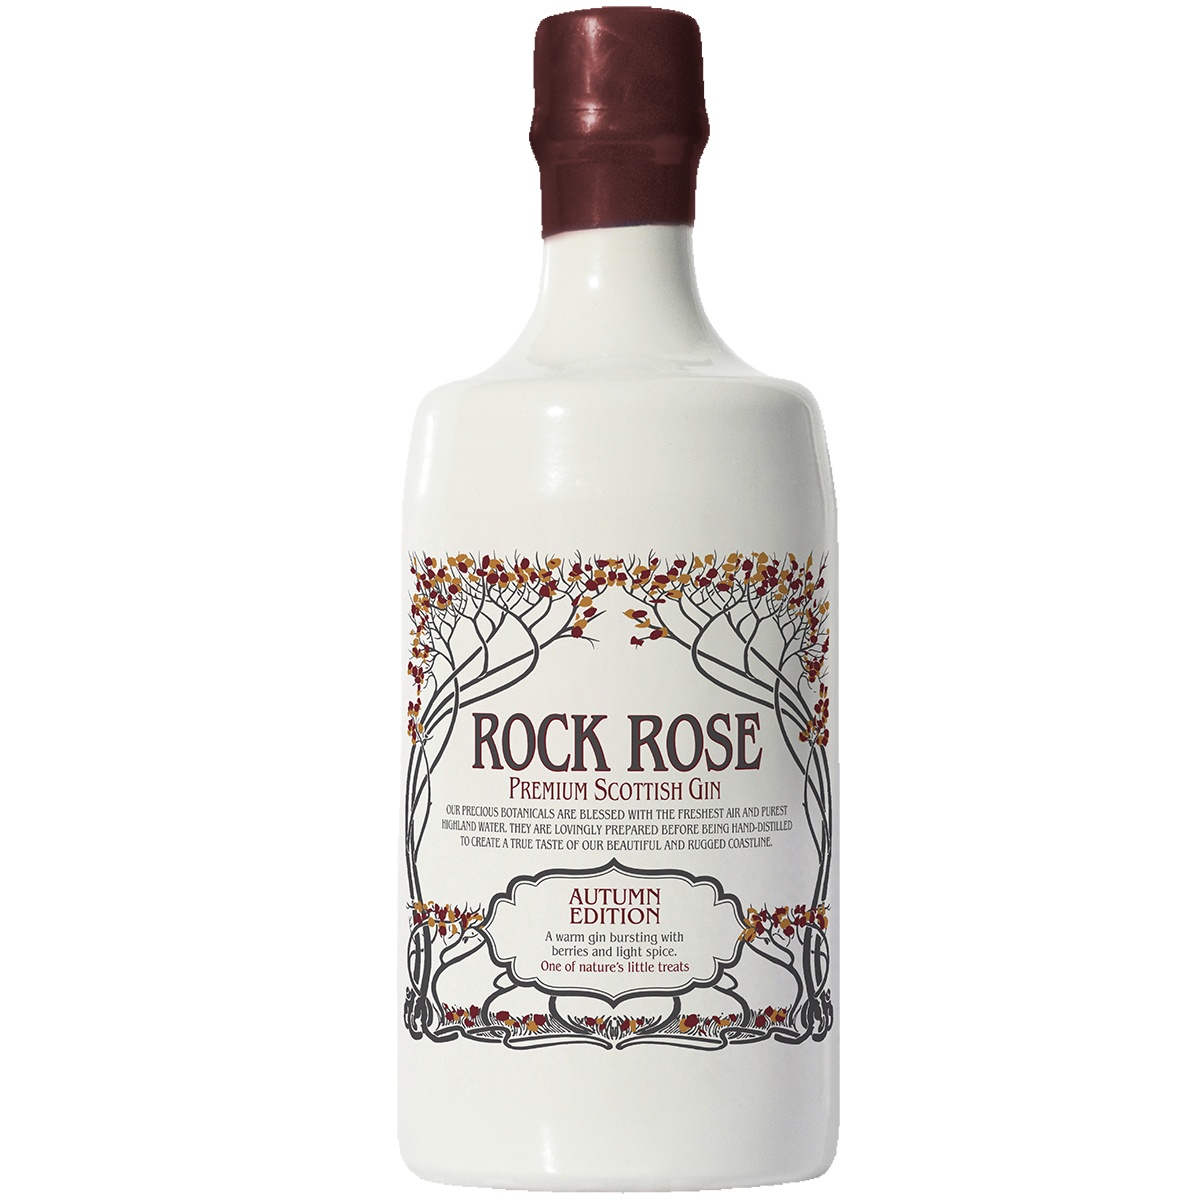 craft-gins-rock-rose-autumn-edition-gin